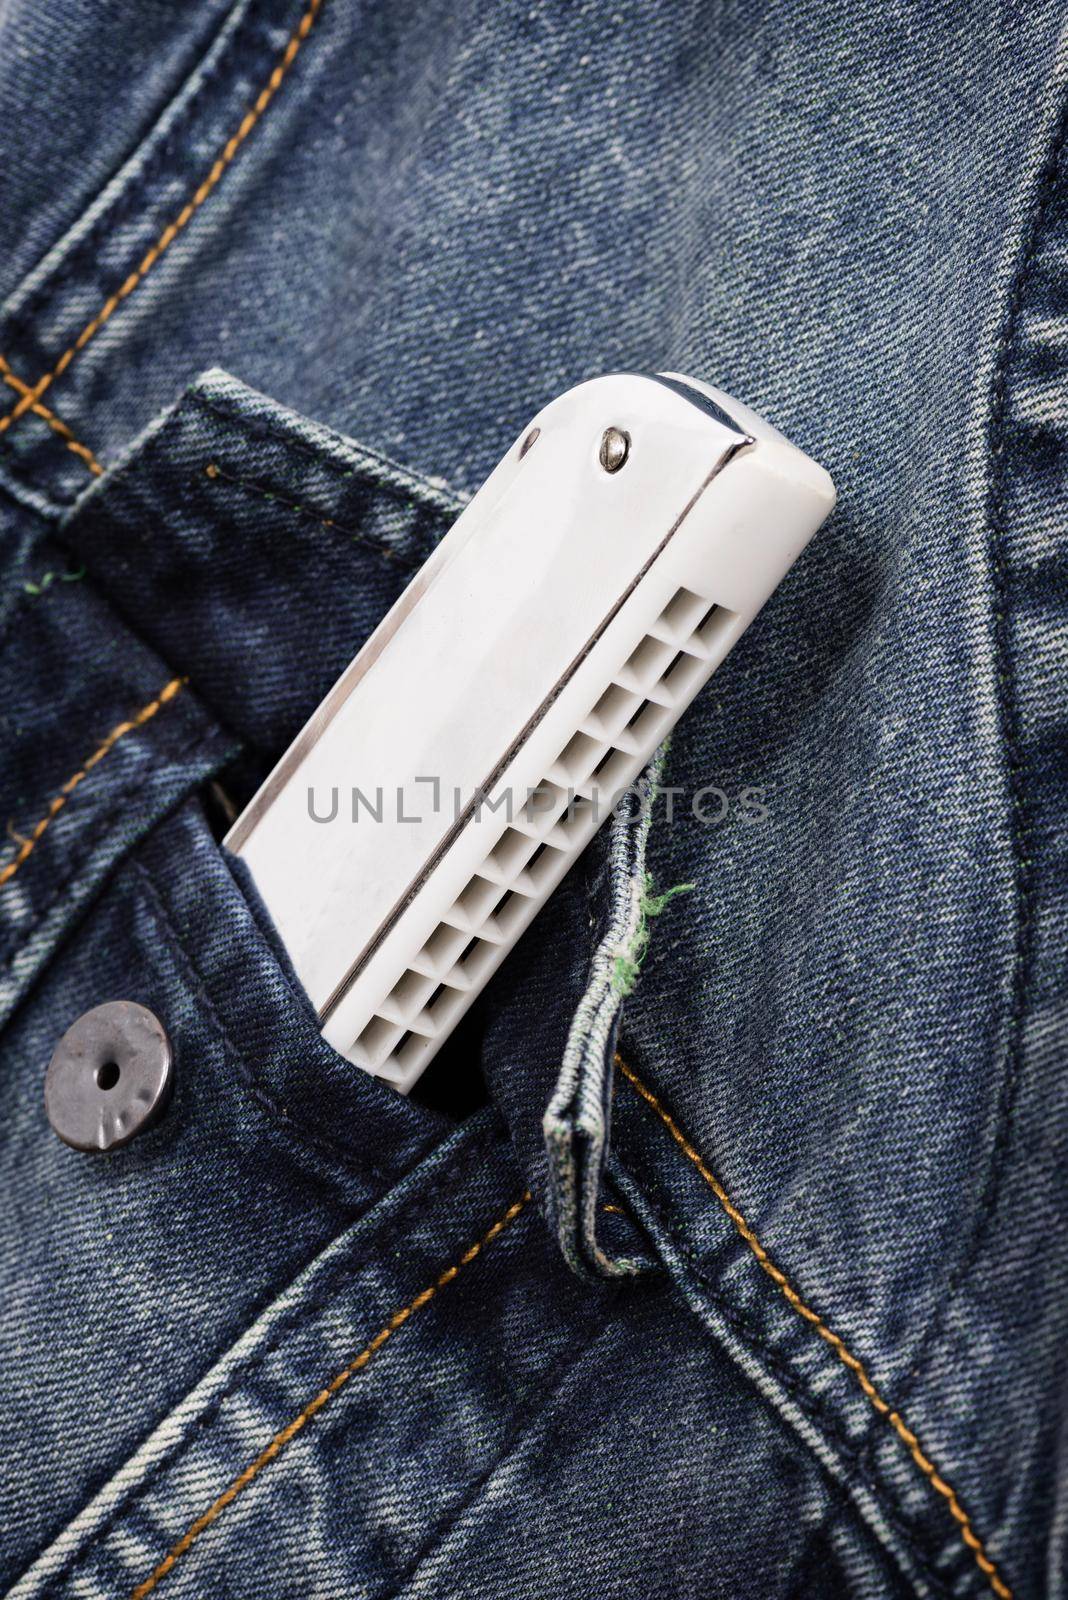 isolate silver/white harmonica in denim pocket, music instrument